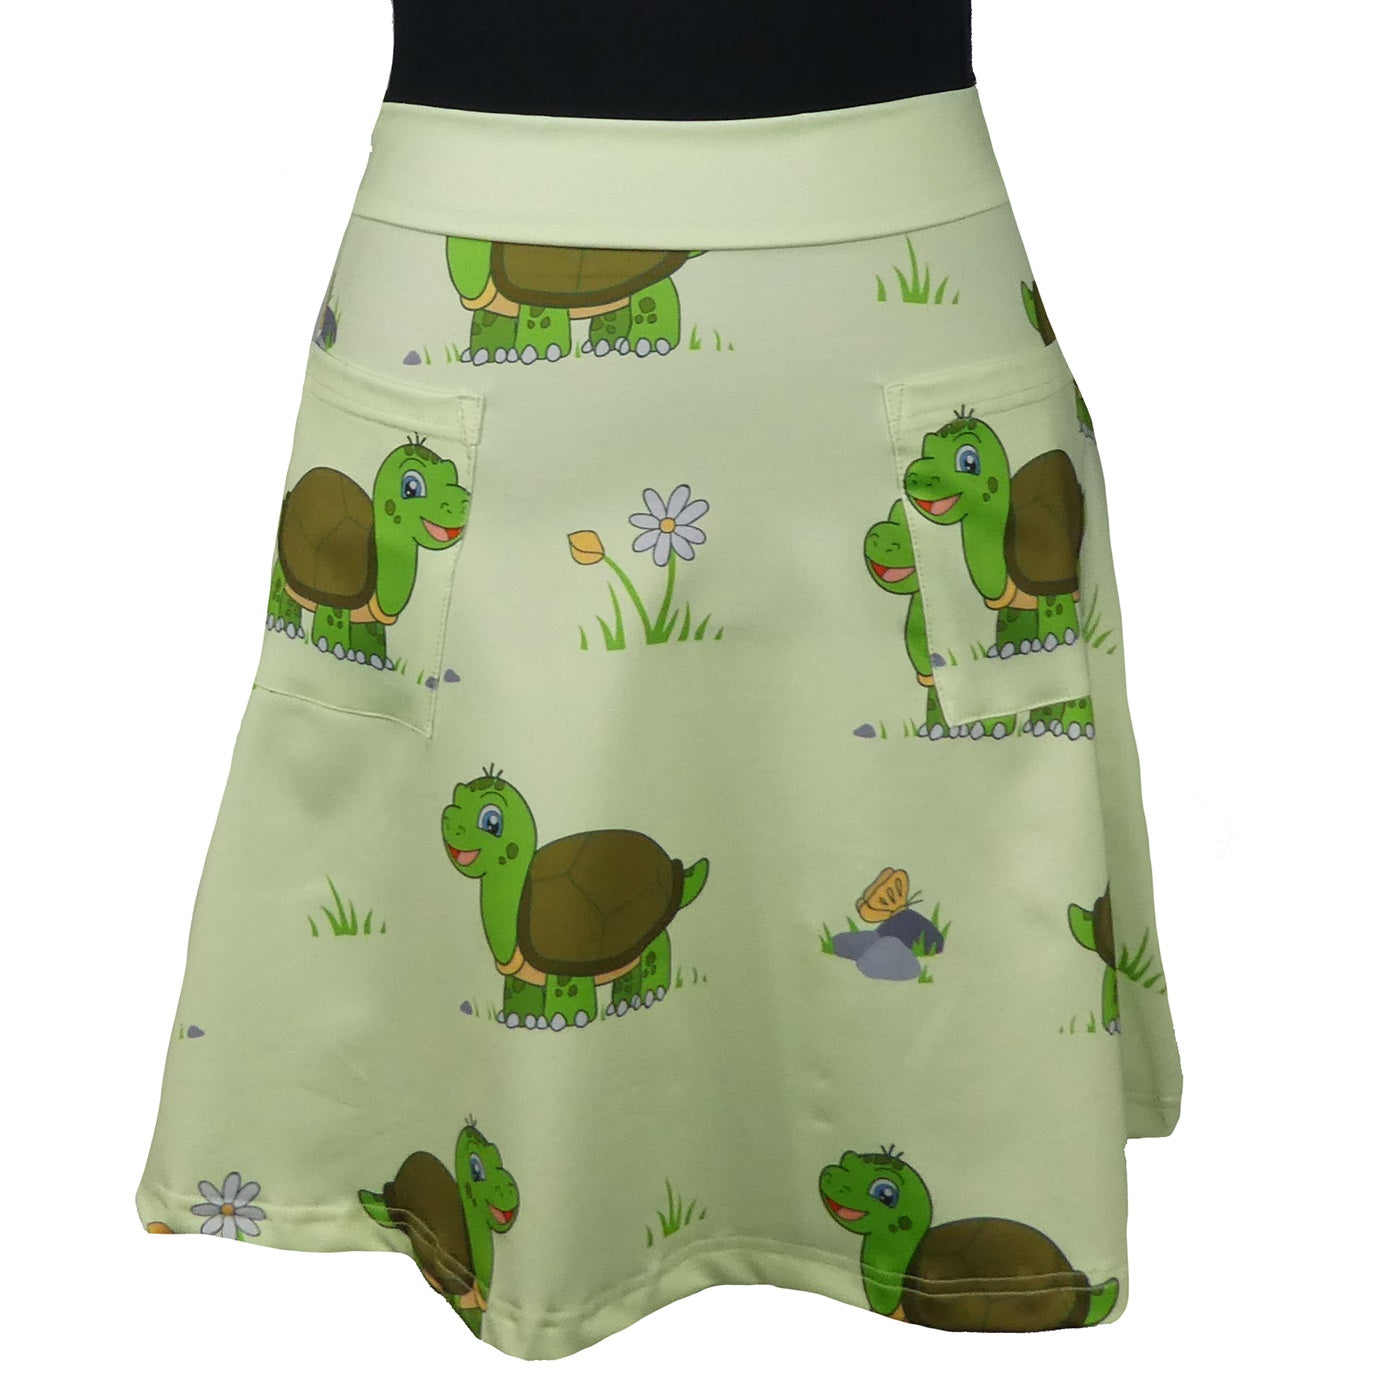 Wisdom Short Skirt by RainbowsAndFairies.com.au (Tortoise - Turle - Skirt With Pockets - Aline Skirt - Vintage Inspired - Kitsch - Animal Print) - SKU: CL_SHORT_WISDO_ORG - Pic-01